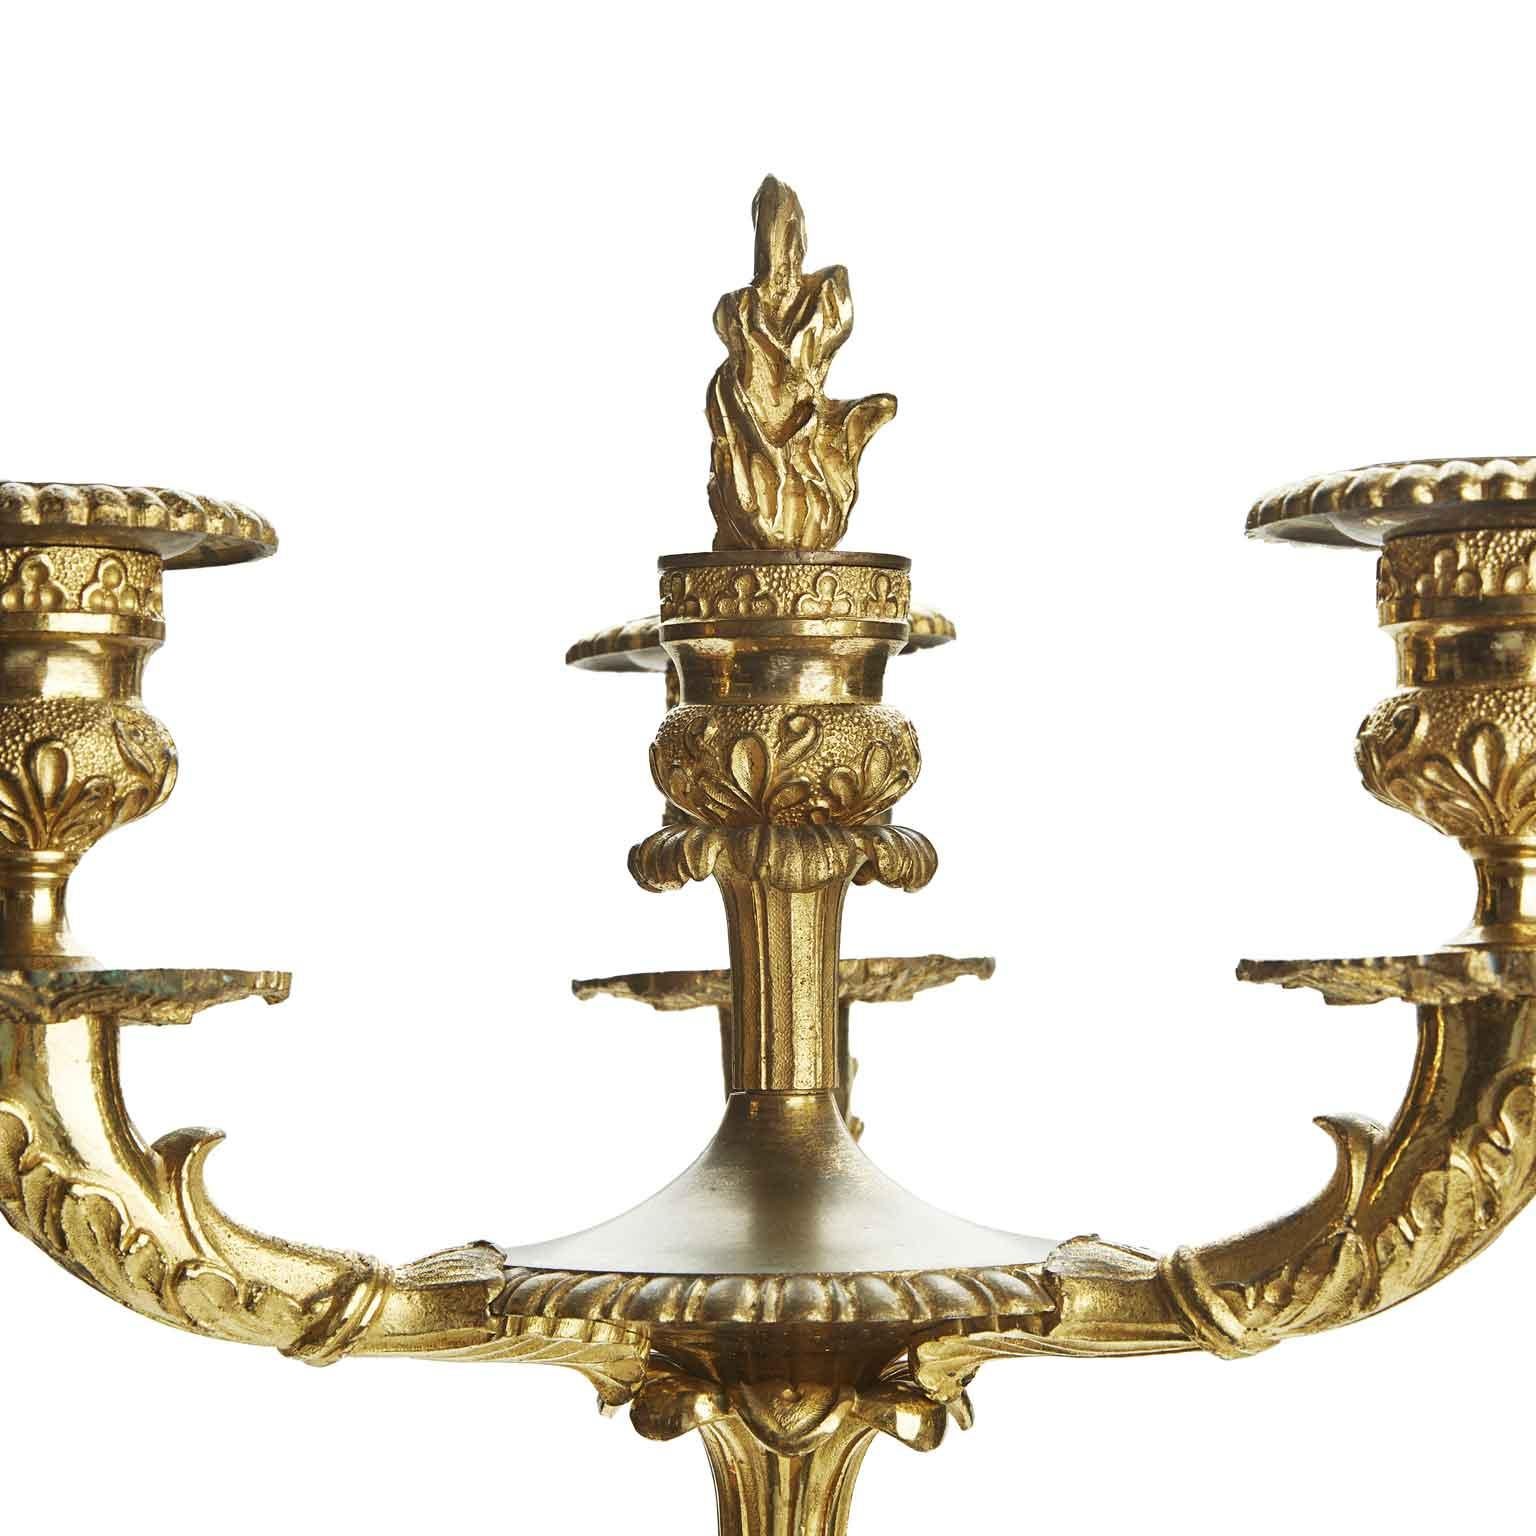 Pair of 19th Century Empire Candelabra Italian Gilt Bronze Three-Arm Flambeaux For Sale 1